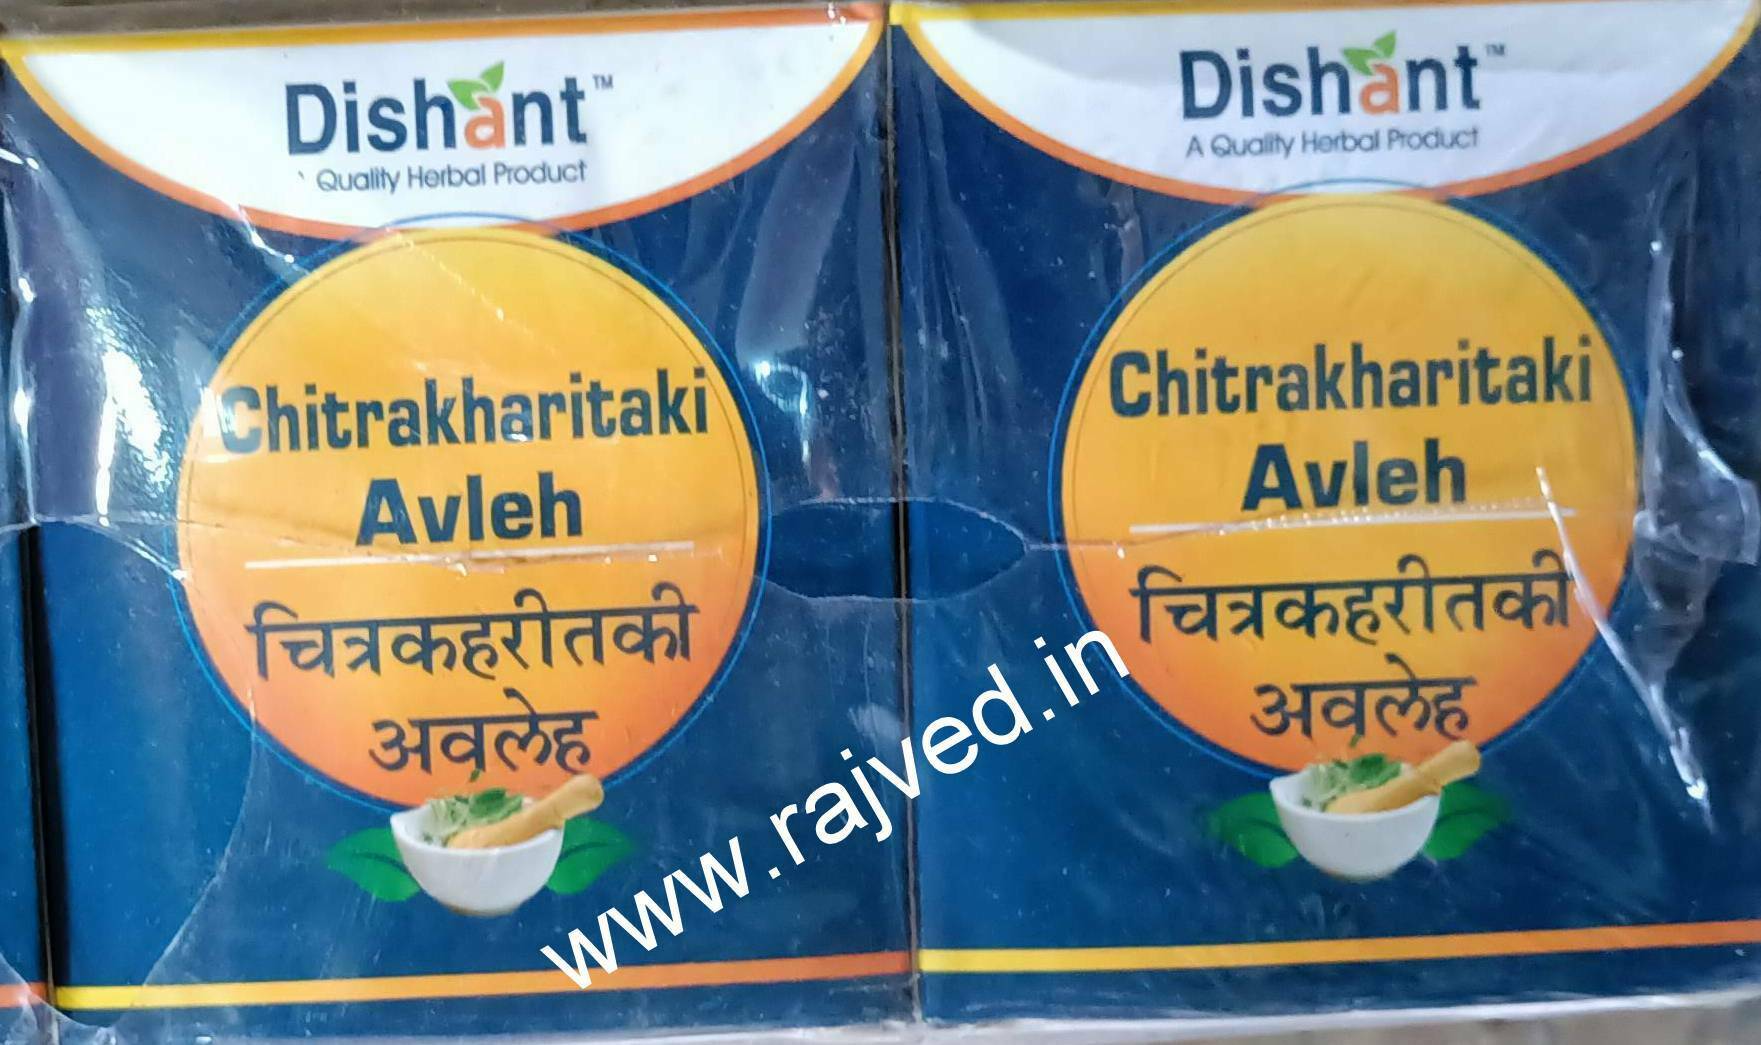 chitrakhataki avleha 400 gm gold upto 20% off dishant ayurvedic suppliers